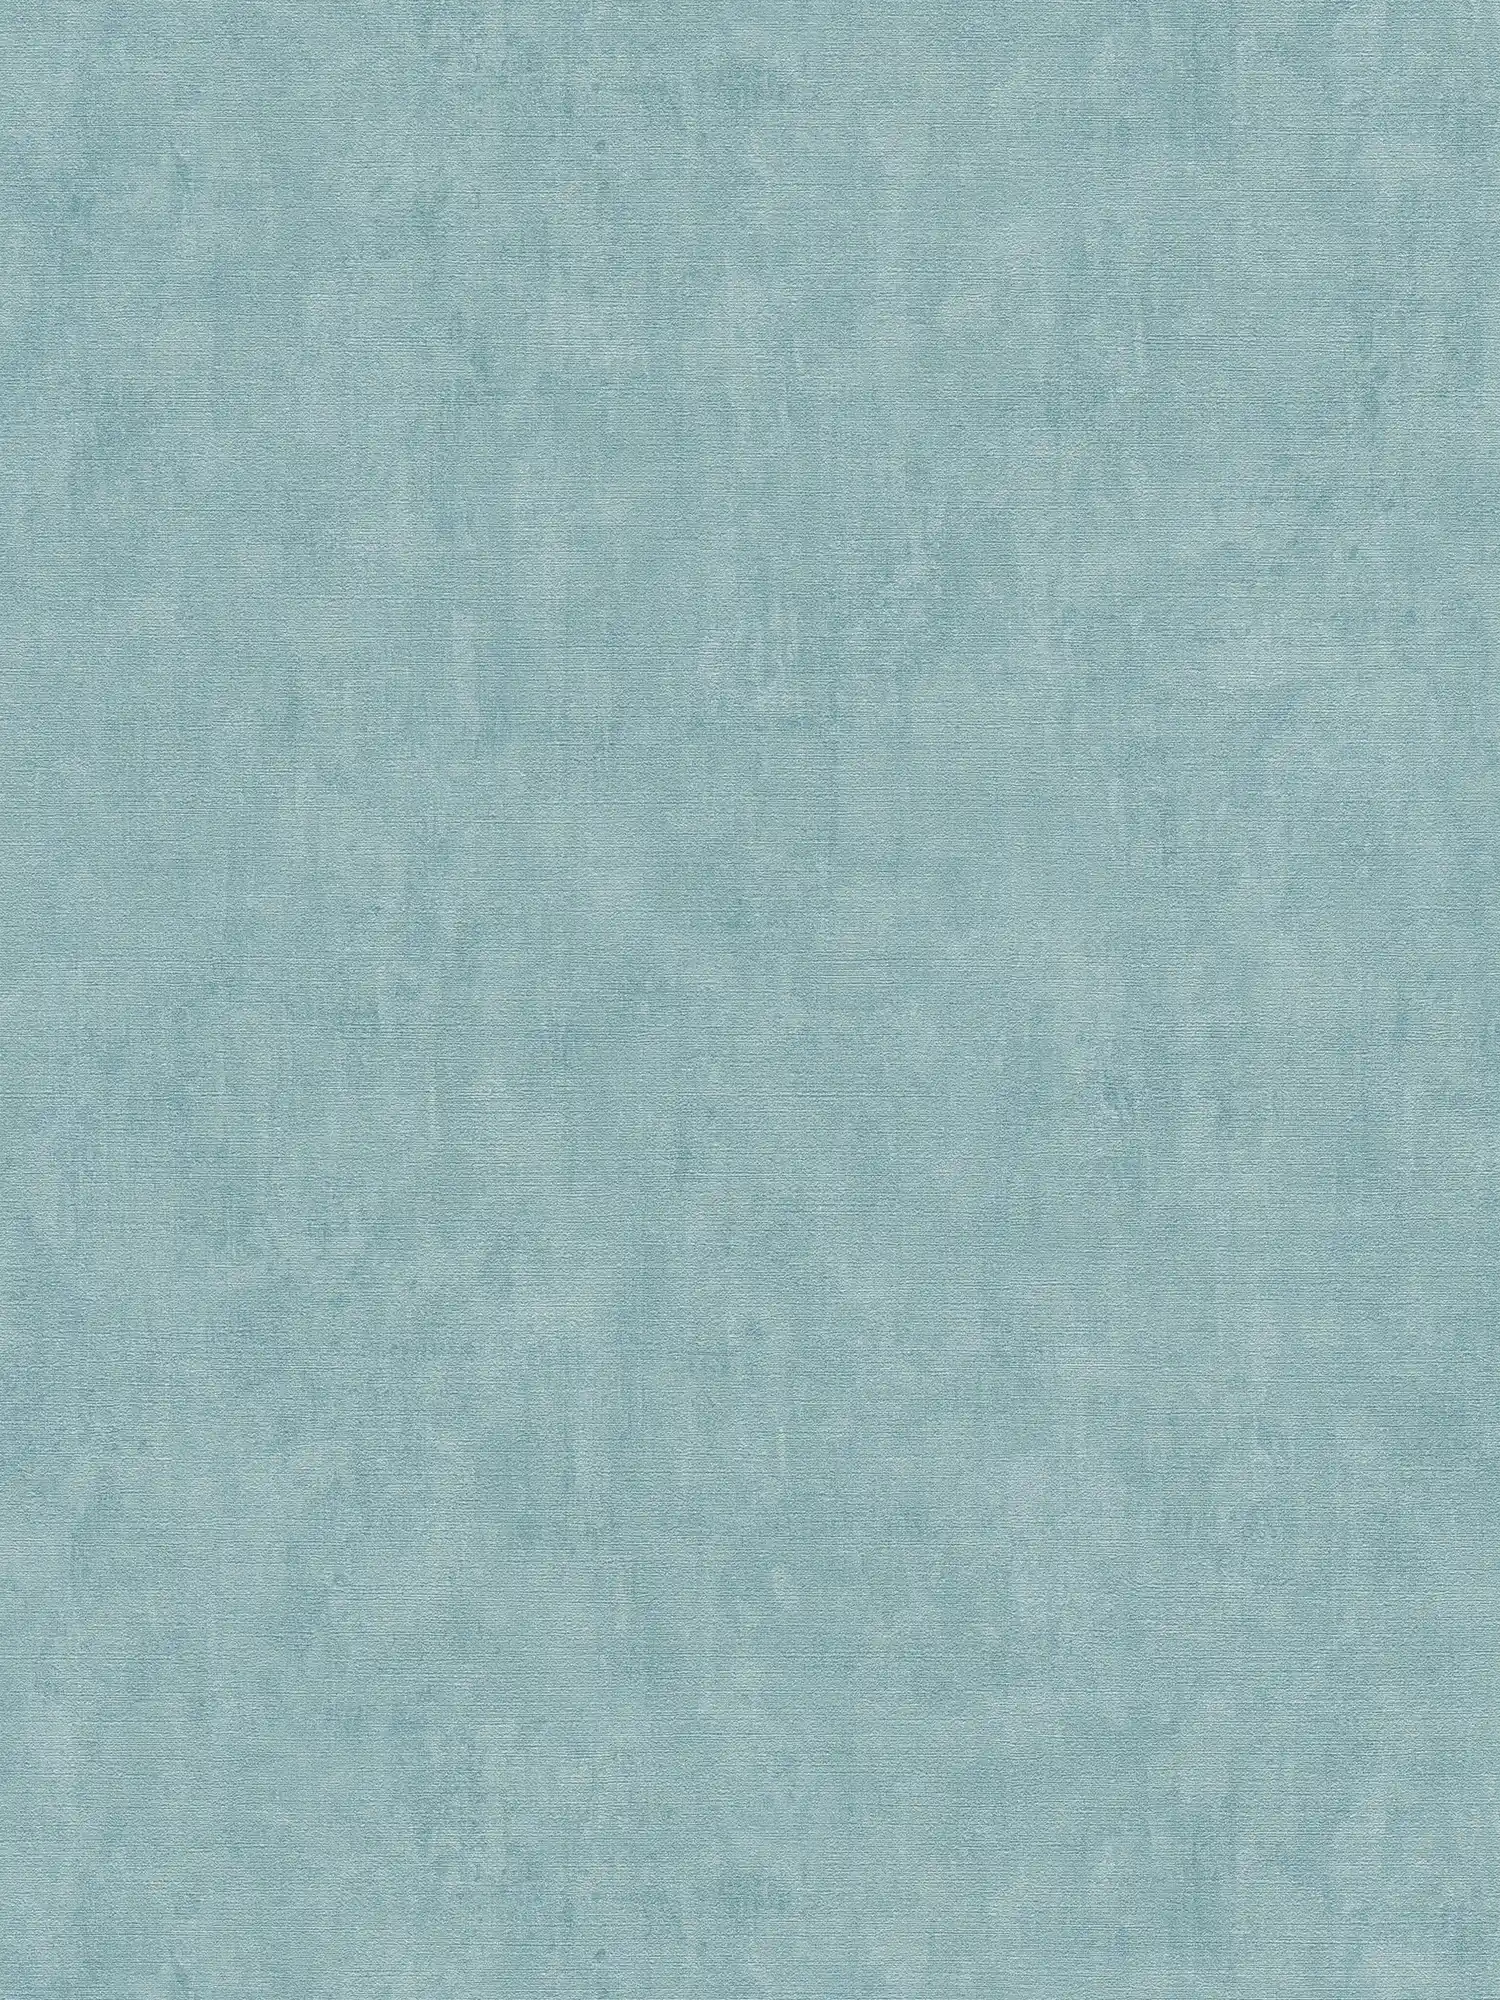 papel pintado de color azul claro sombreado en aspecto vintage - azul
